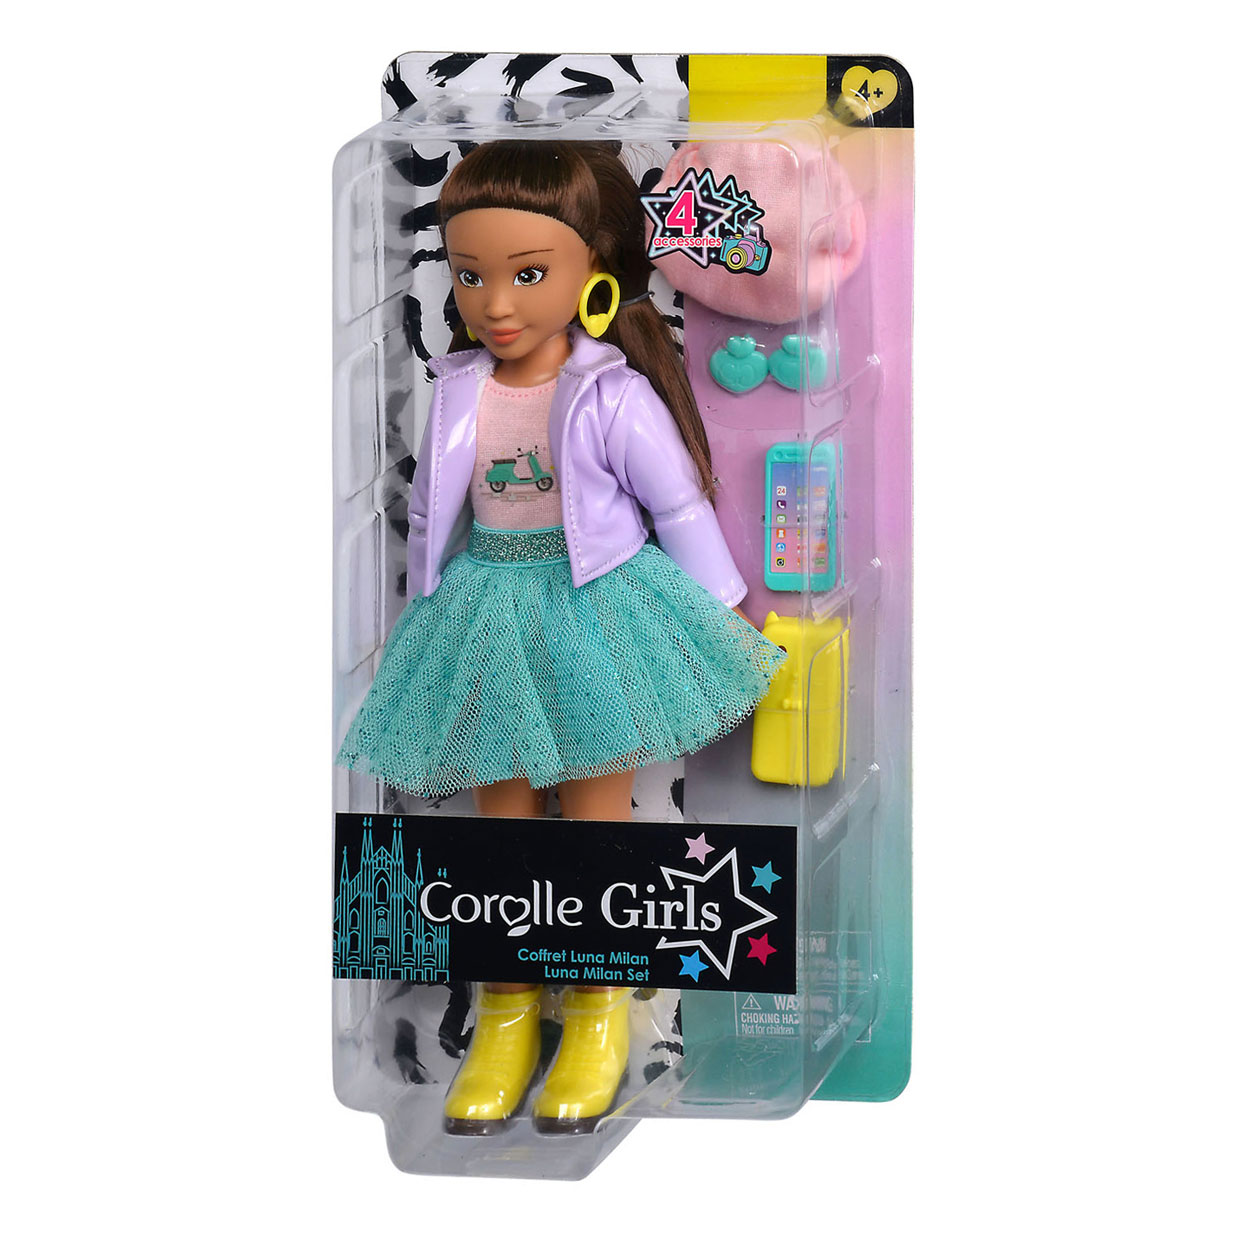 Corolle - Coffret Luna Shopping COROLLE GIRLS - poupée mannequin